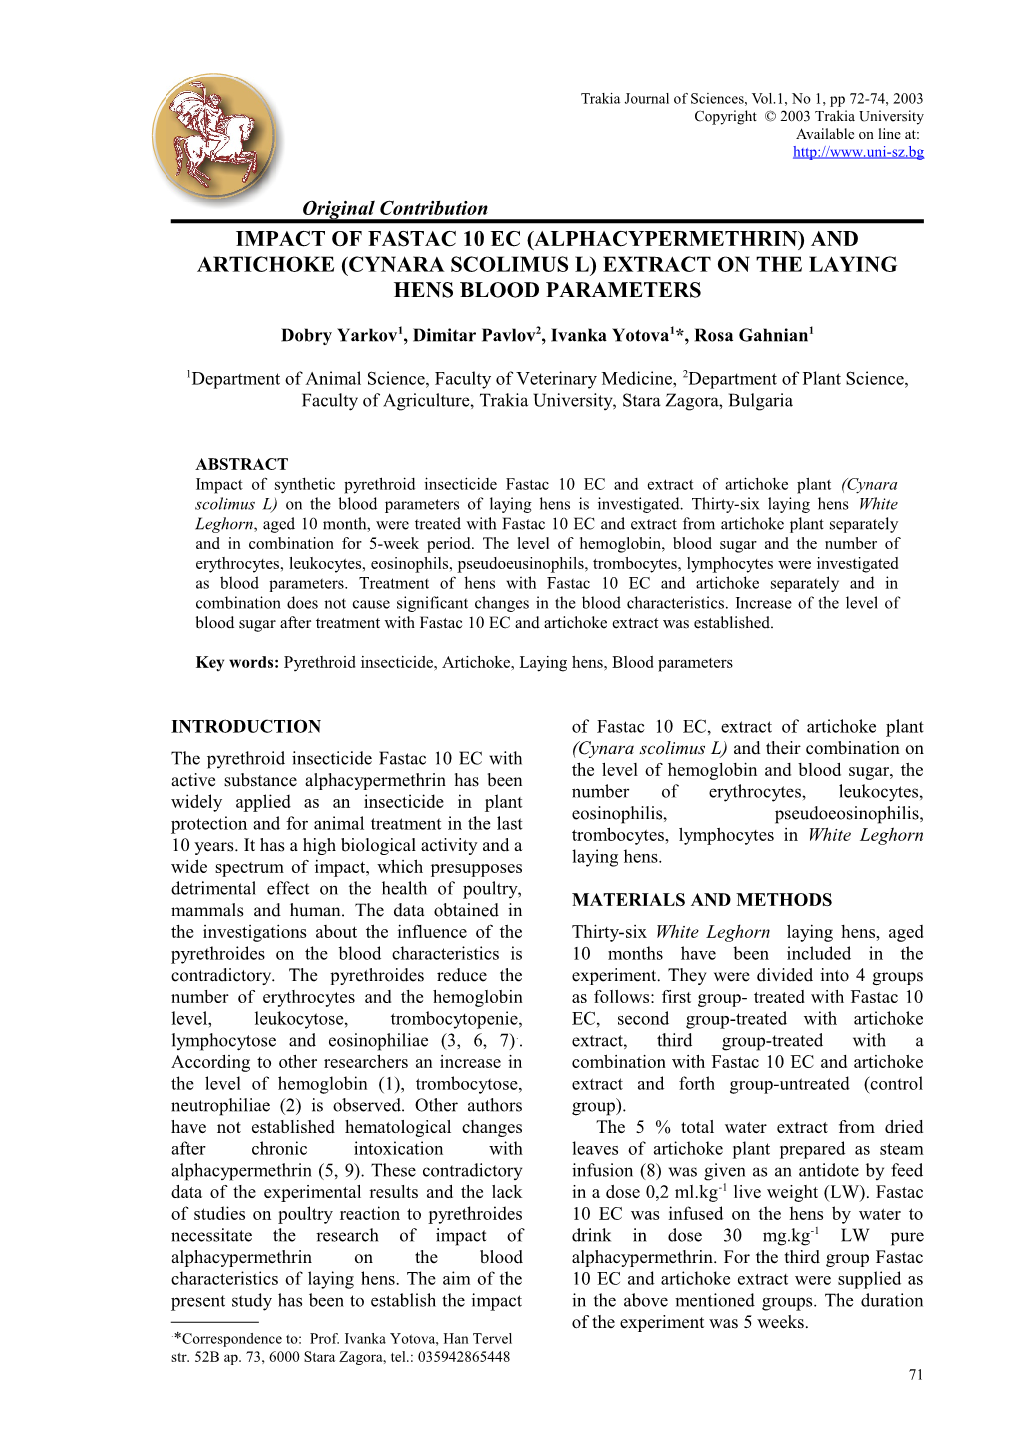 Impact of Fastac 10 Ec (Alphacypermethrin) and Artichoke (Cynara Scolimus L) Extract On